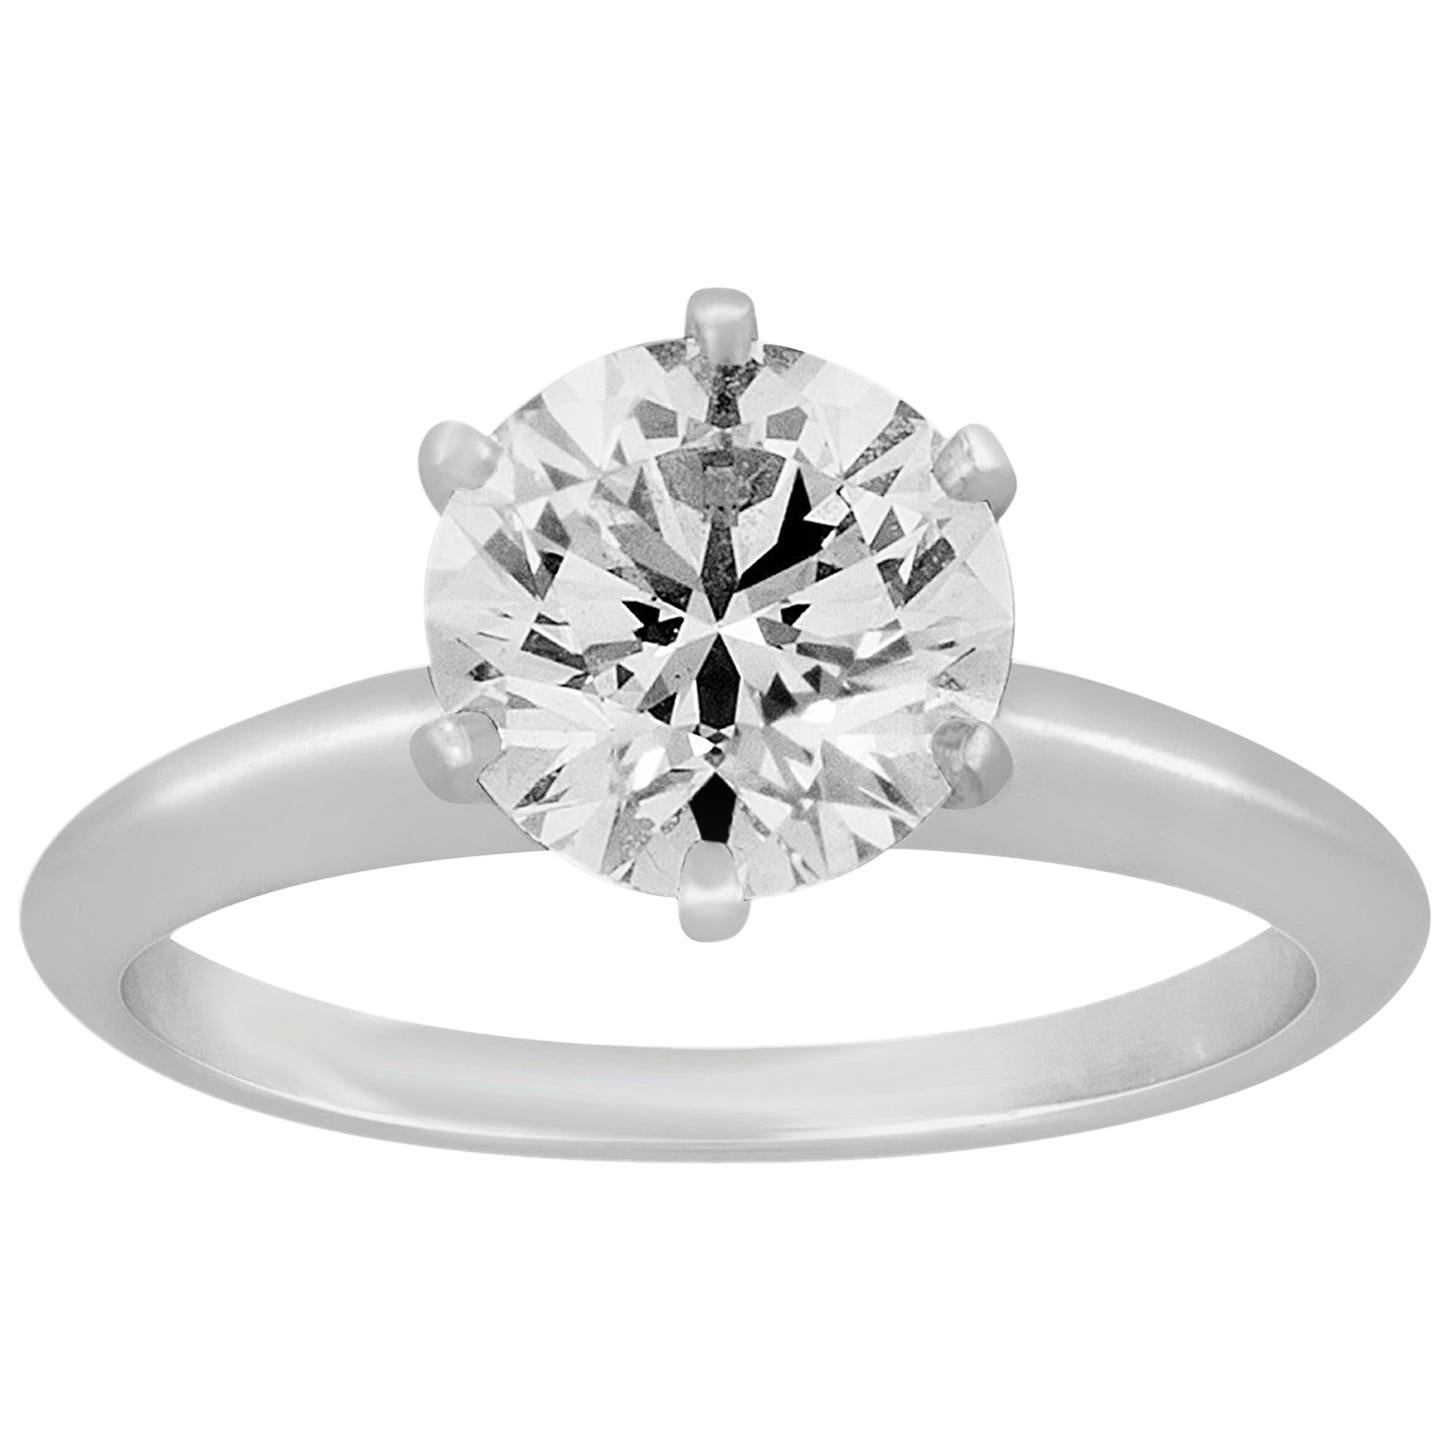 Tiffany & Co. 1.93 Carat G VVS1 Diamond Platinum Ring